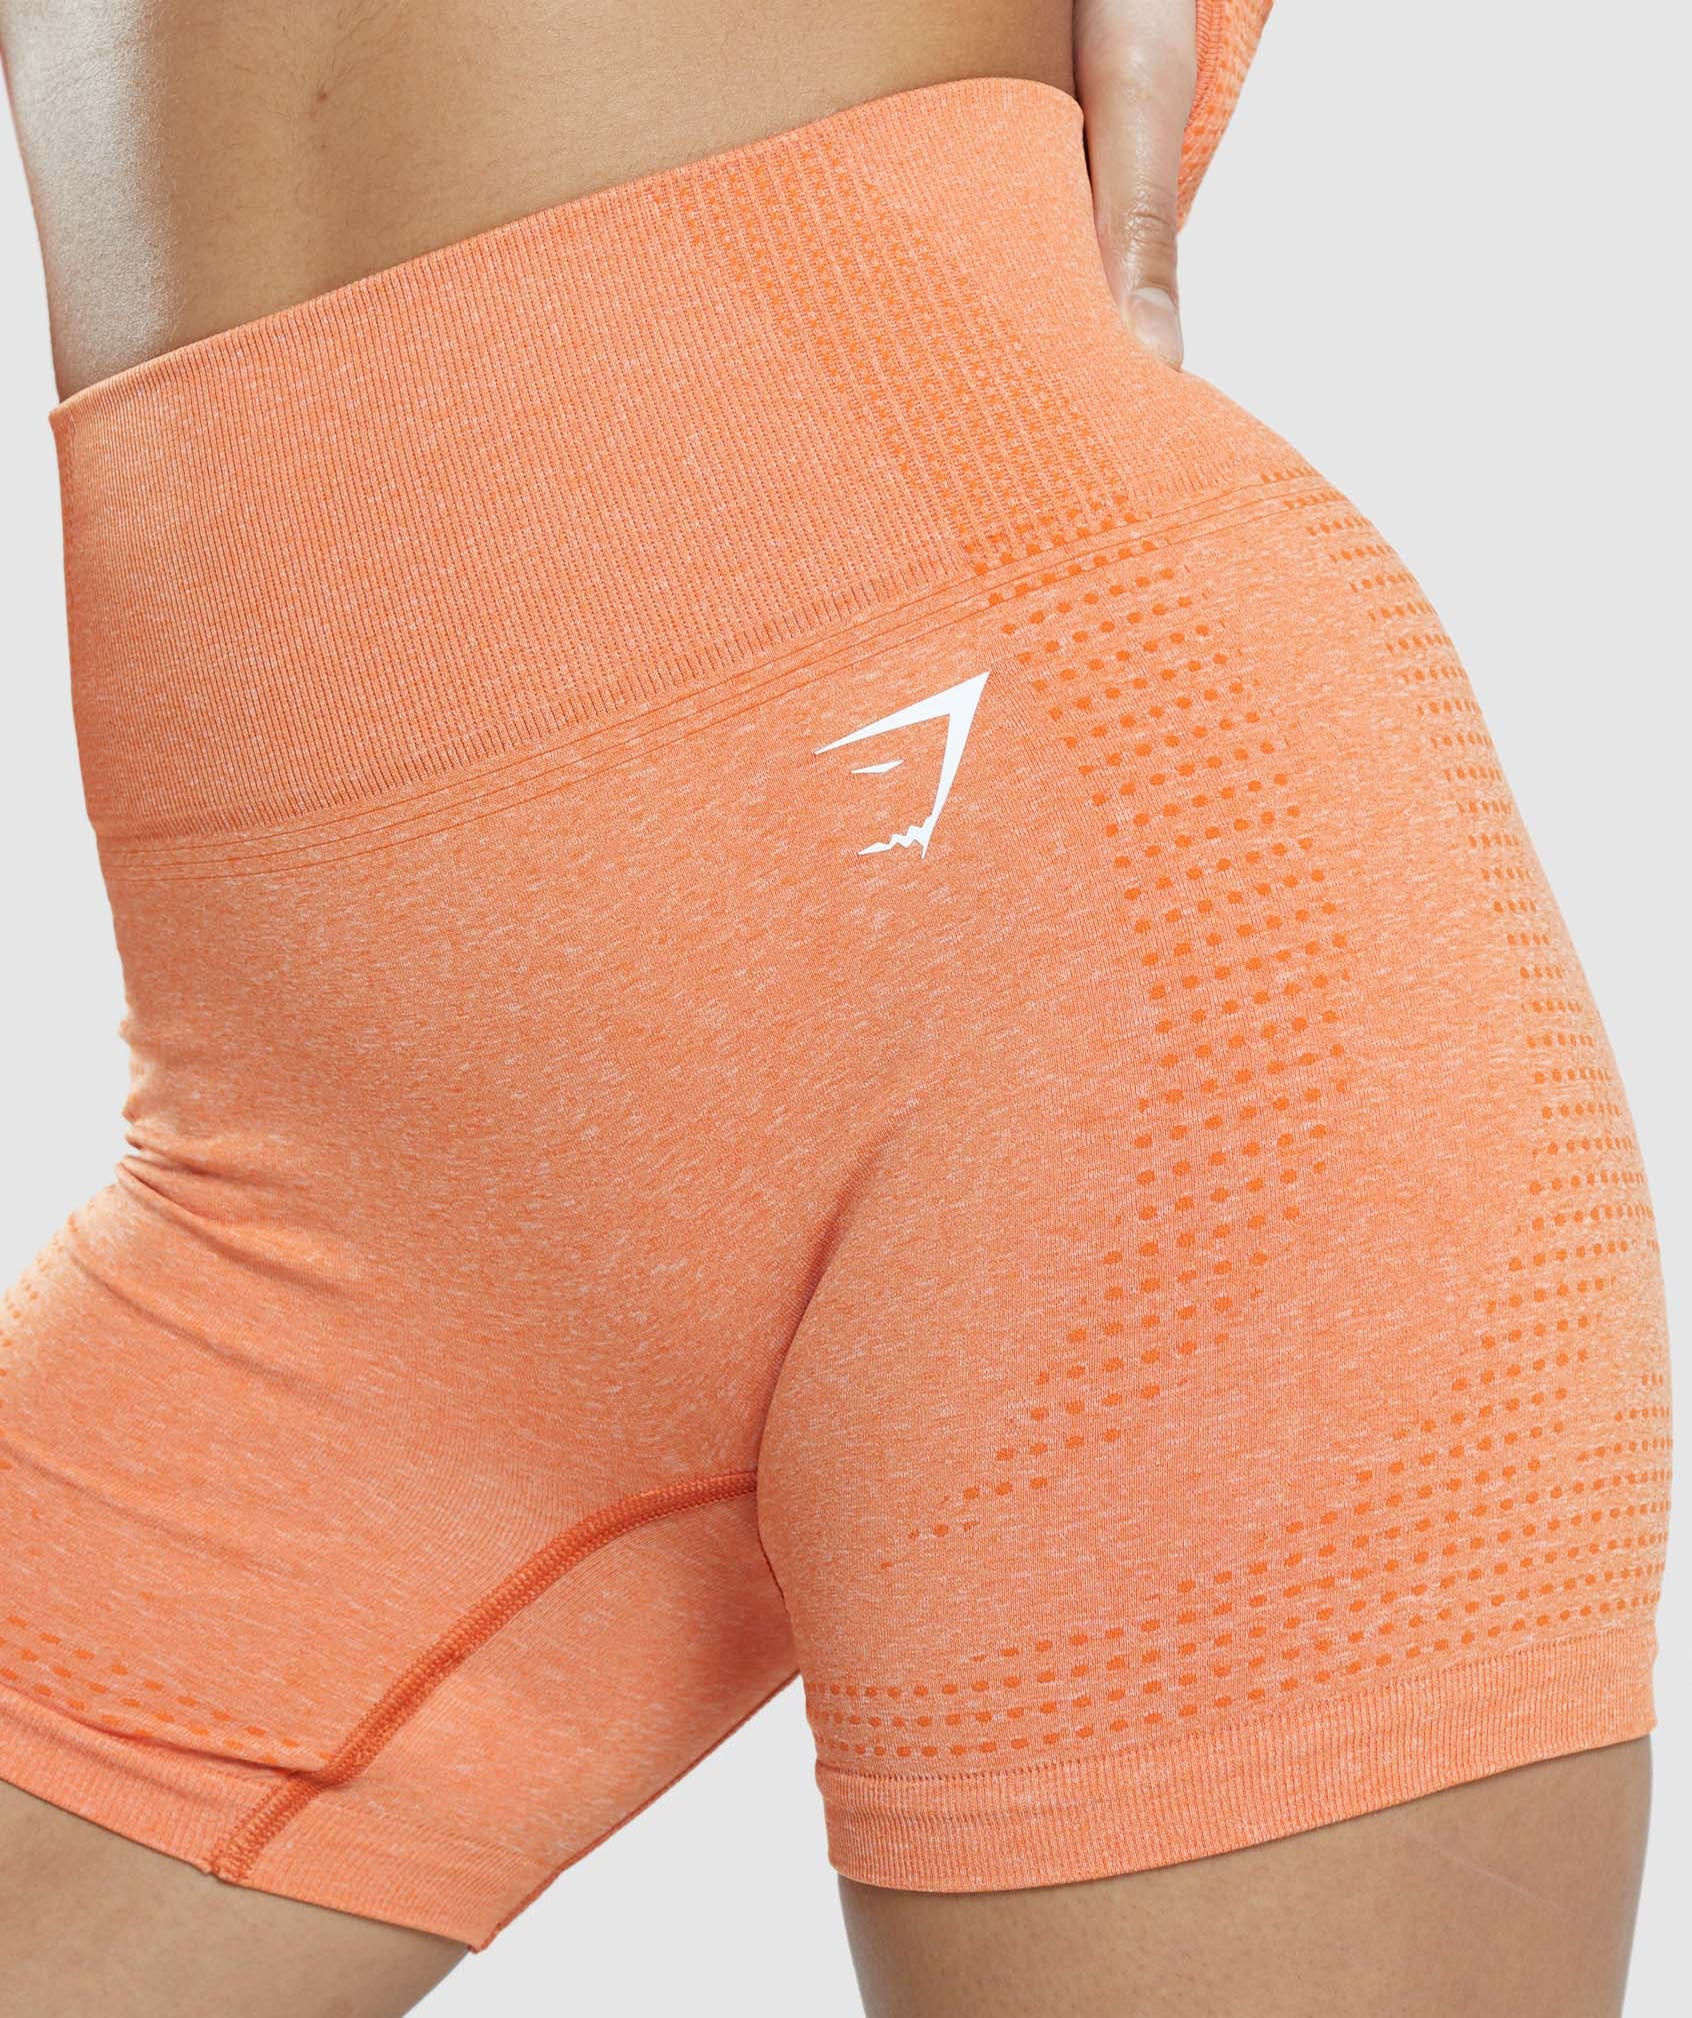 Gymshark Vital 2.0 Leggings Orange Marl - $39 (35% Off Retail